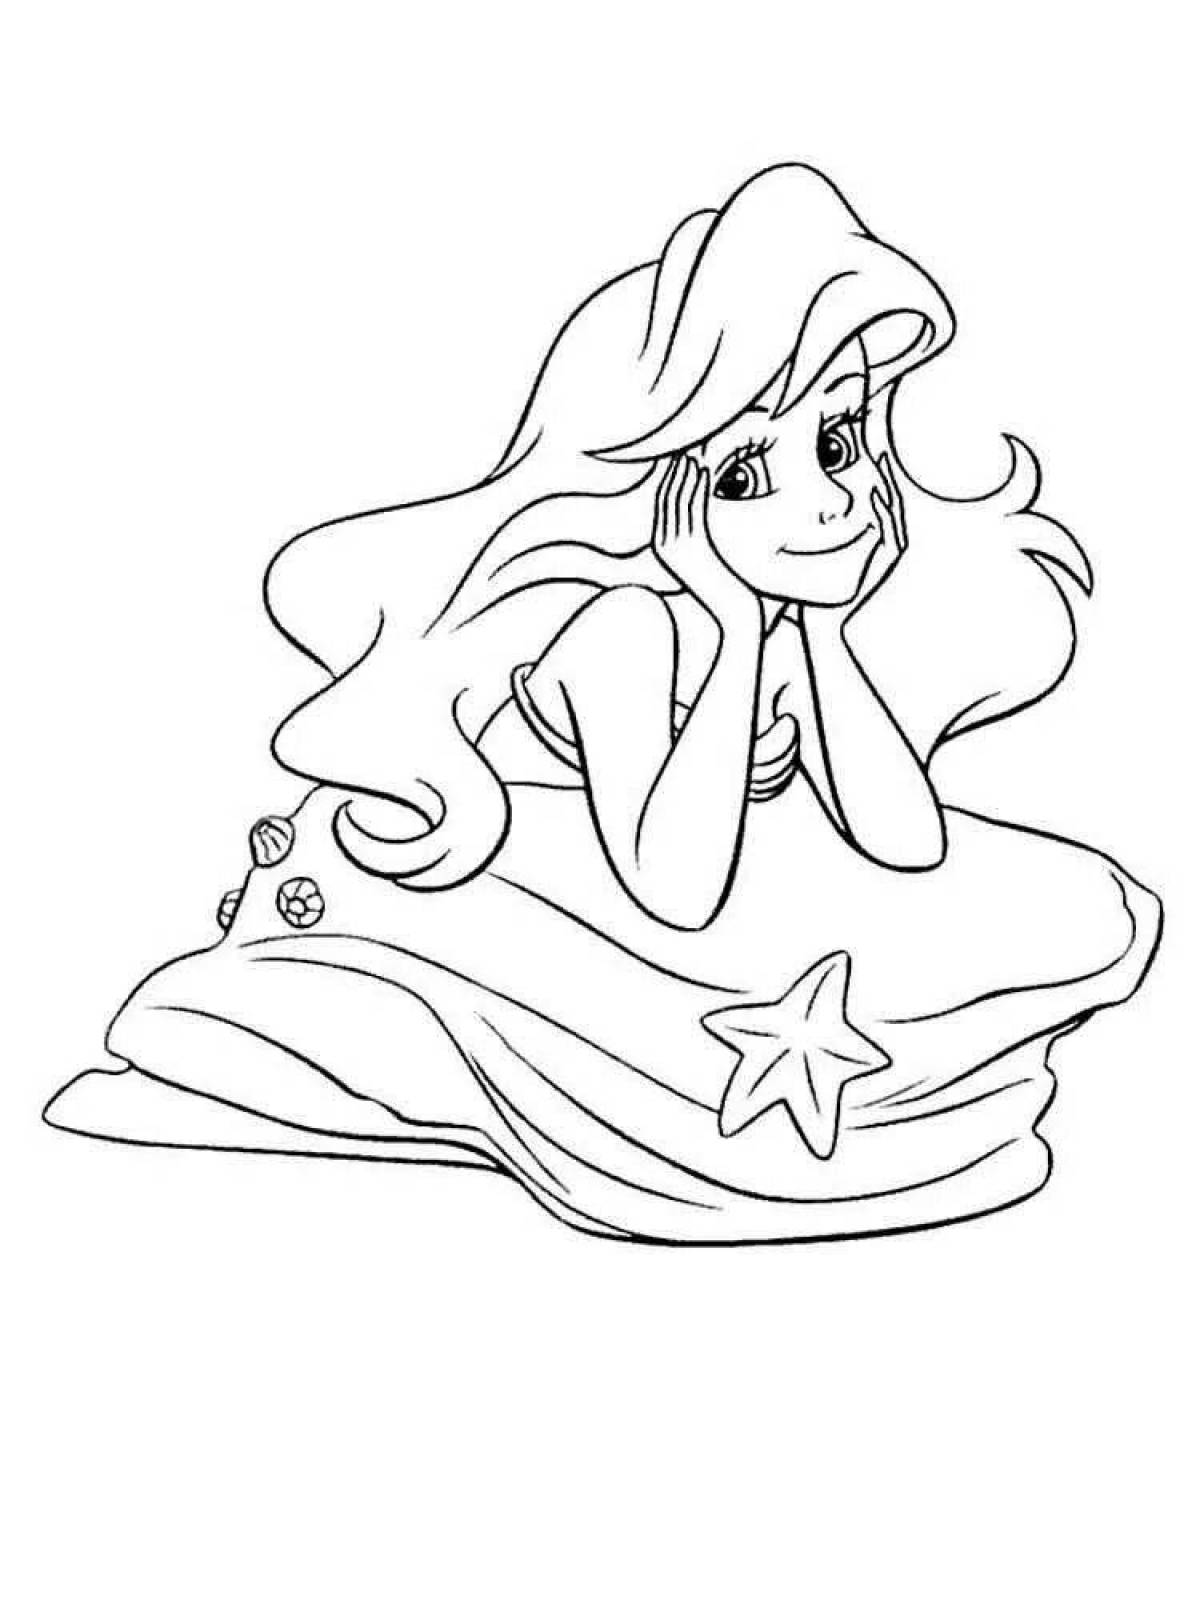 Princess ariel's fancy coloring book